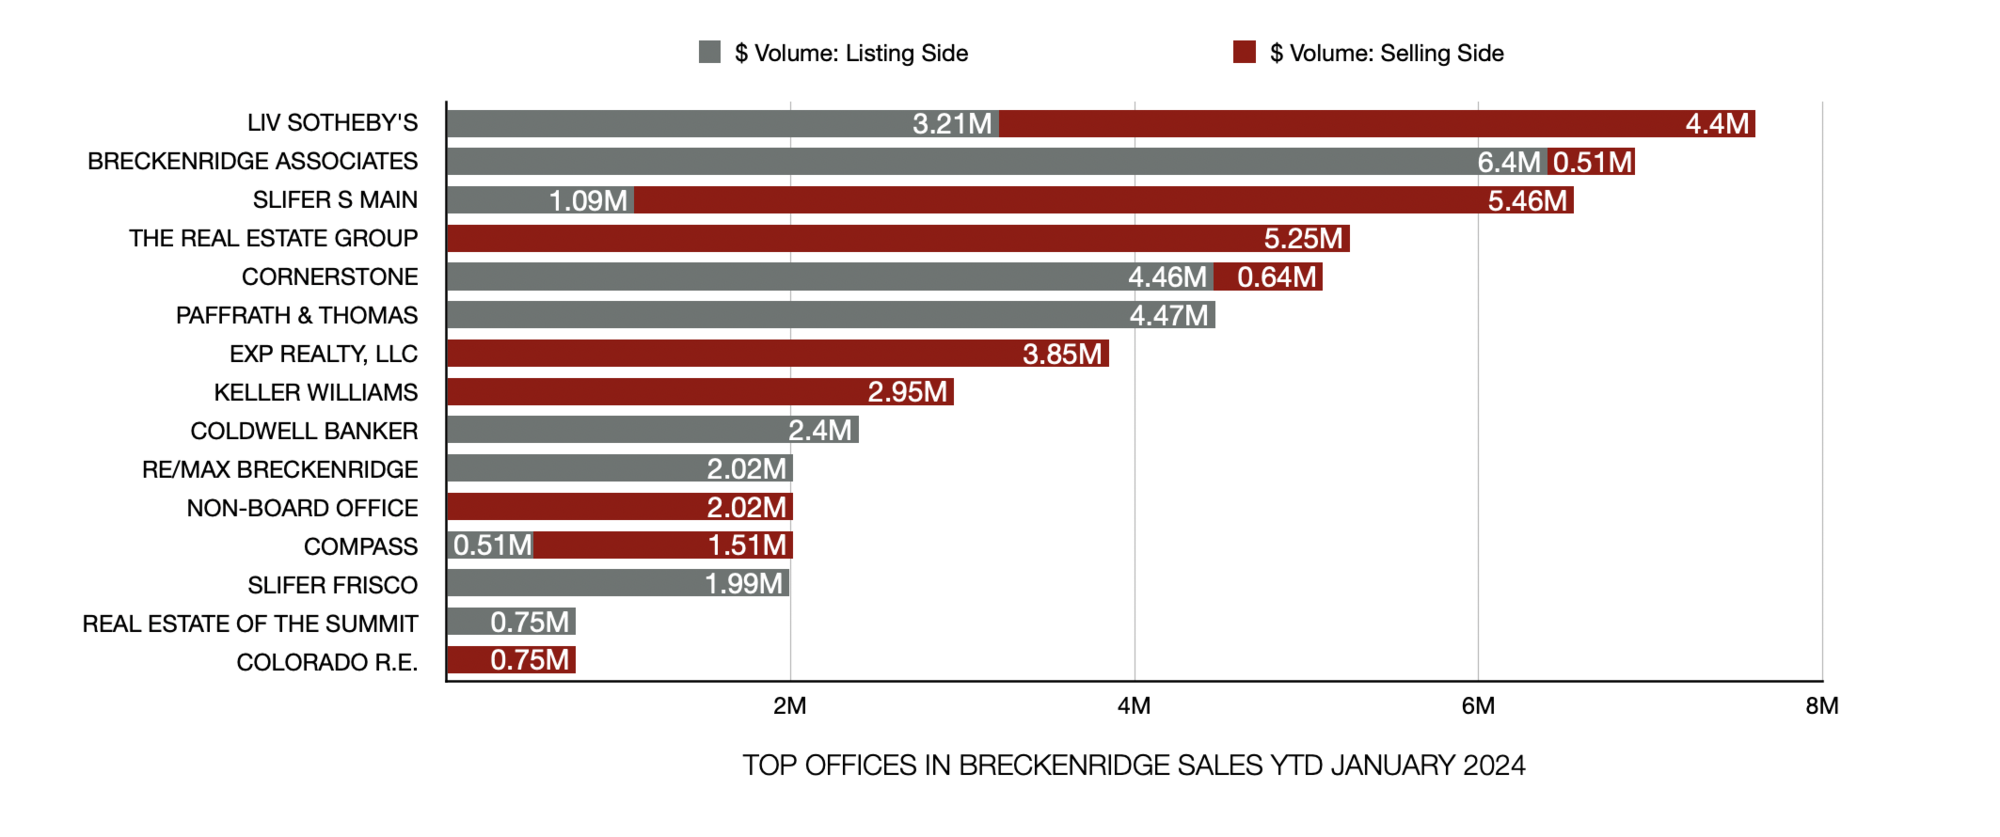 Top Selling Real Estate Offices in Breckenridge, Colorado